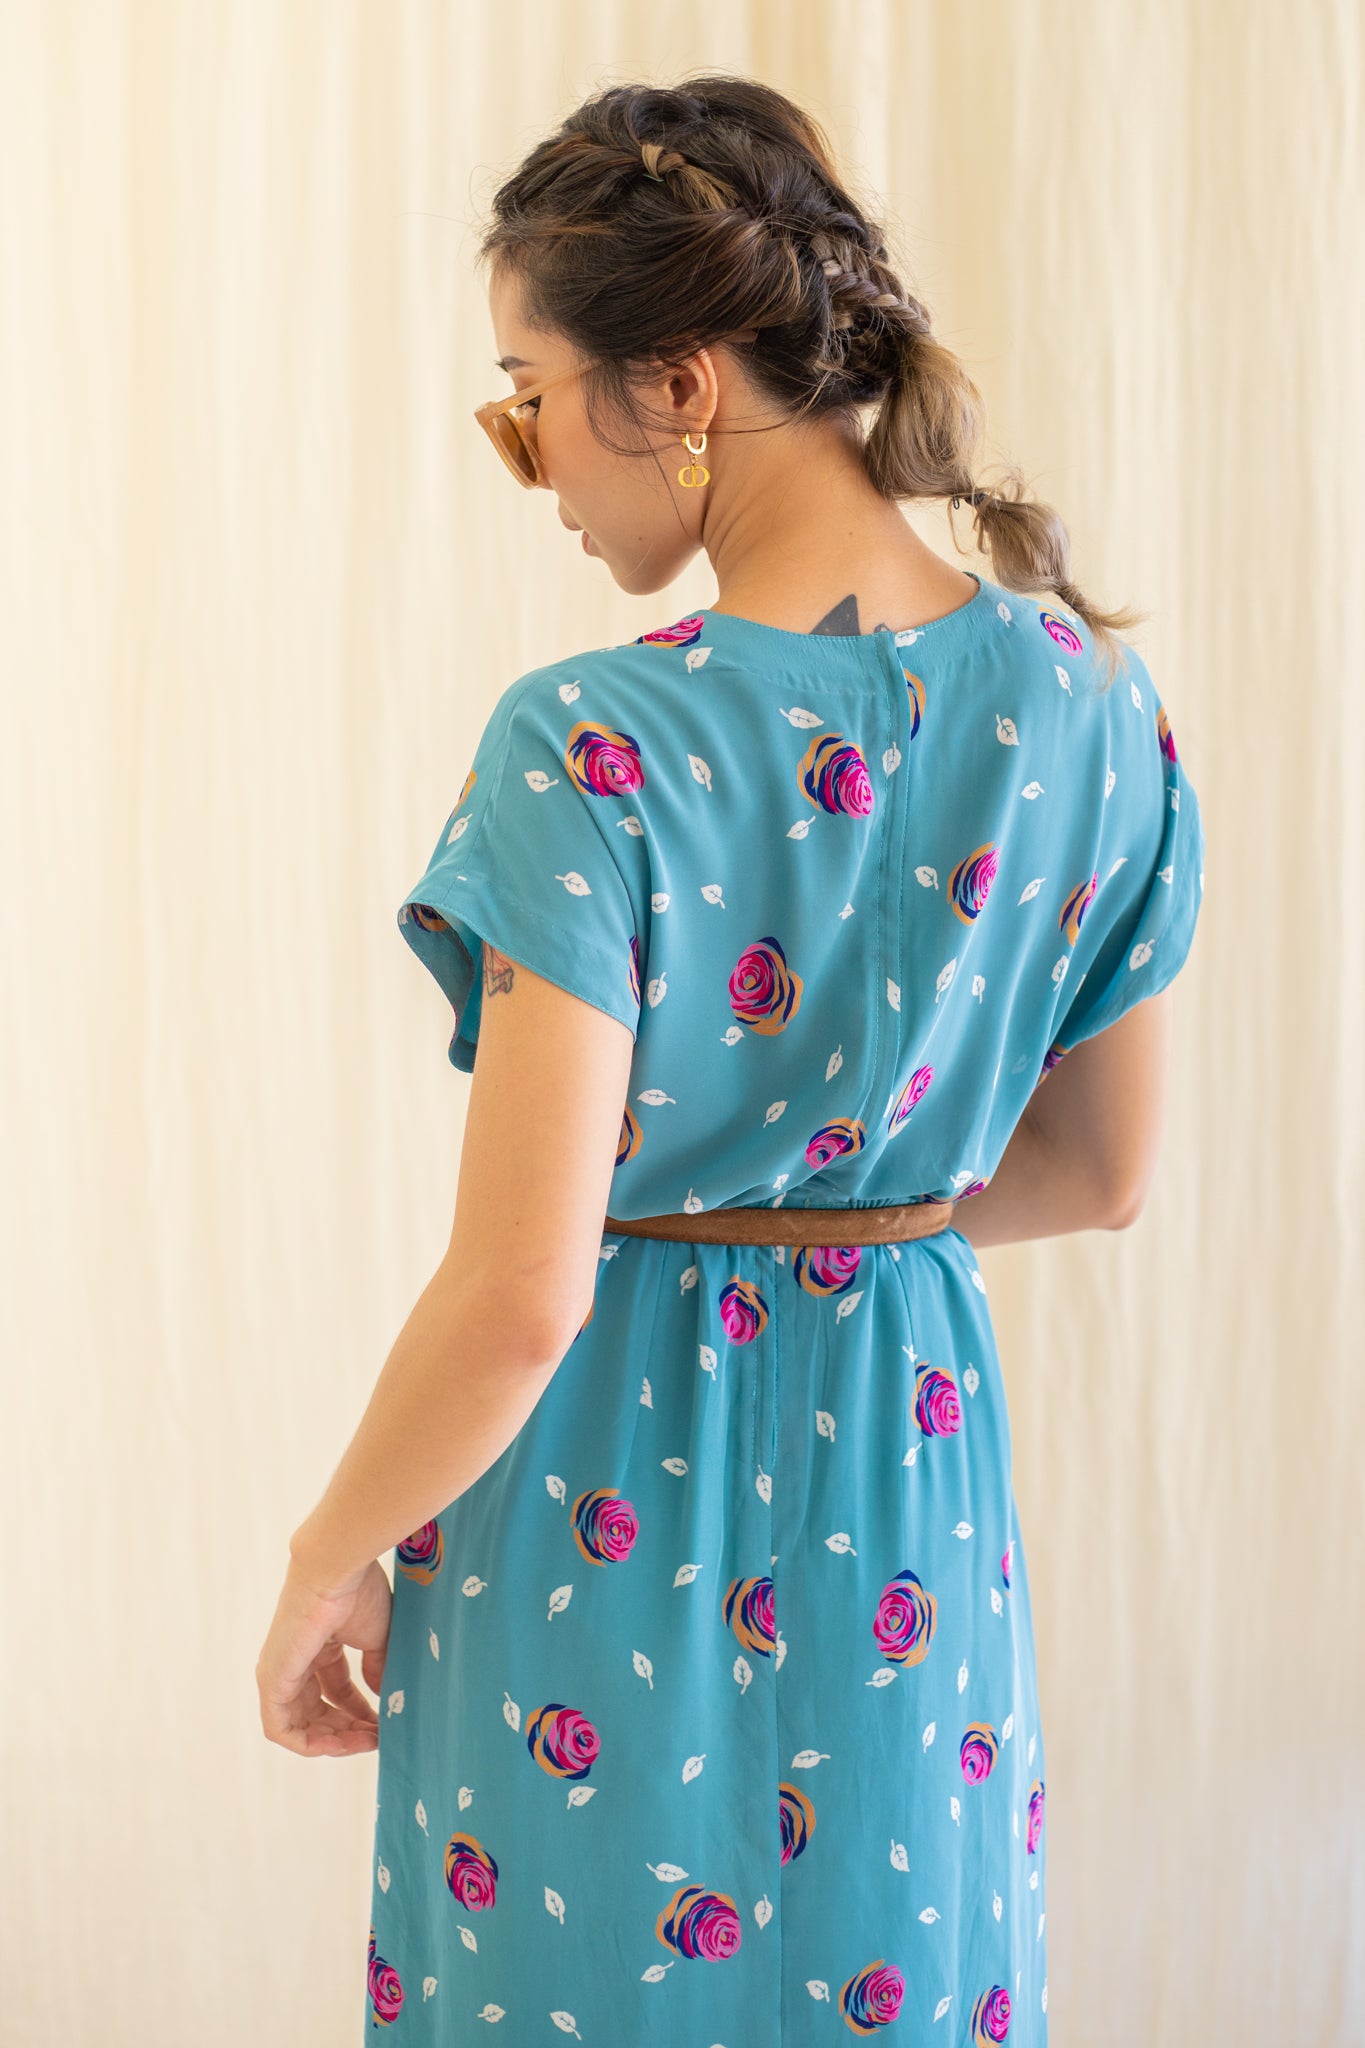 Pink rose print in blue chiffon vintage dress